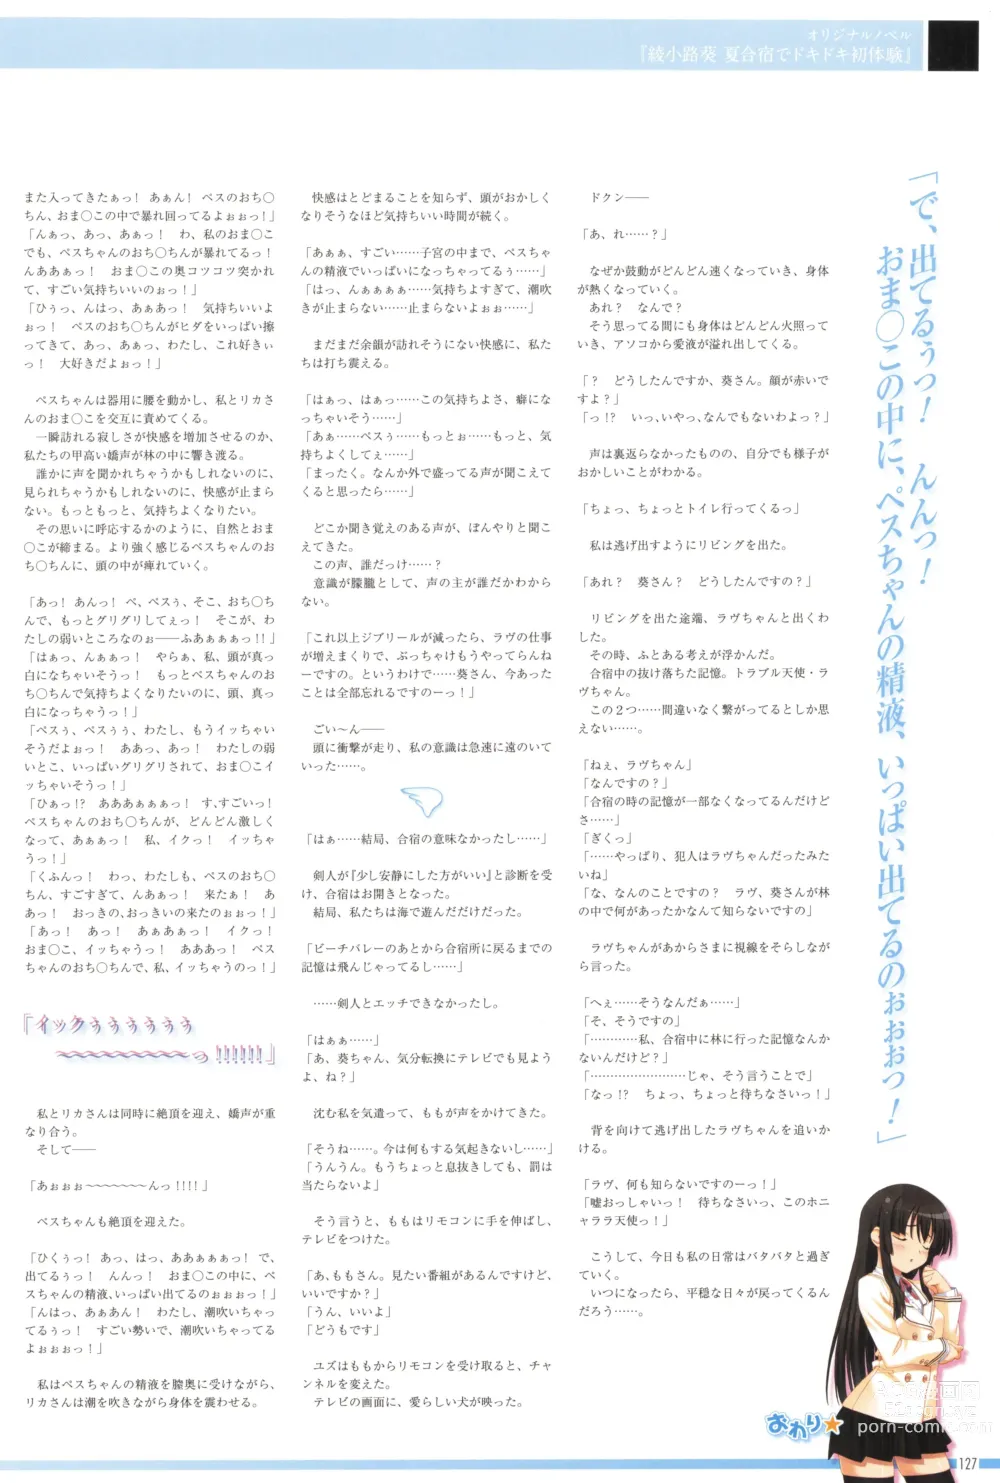 Page 131 of manga Makai Tenshi Djibril 4 Official Fanbook